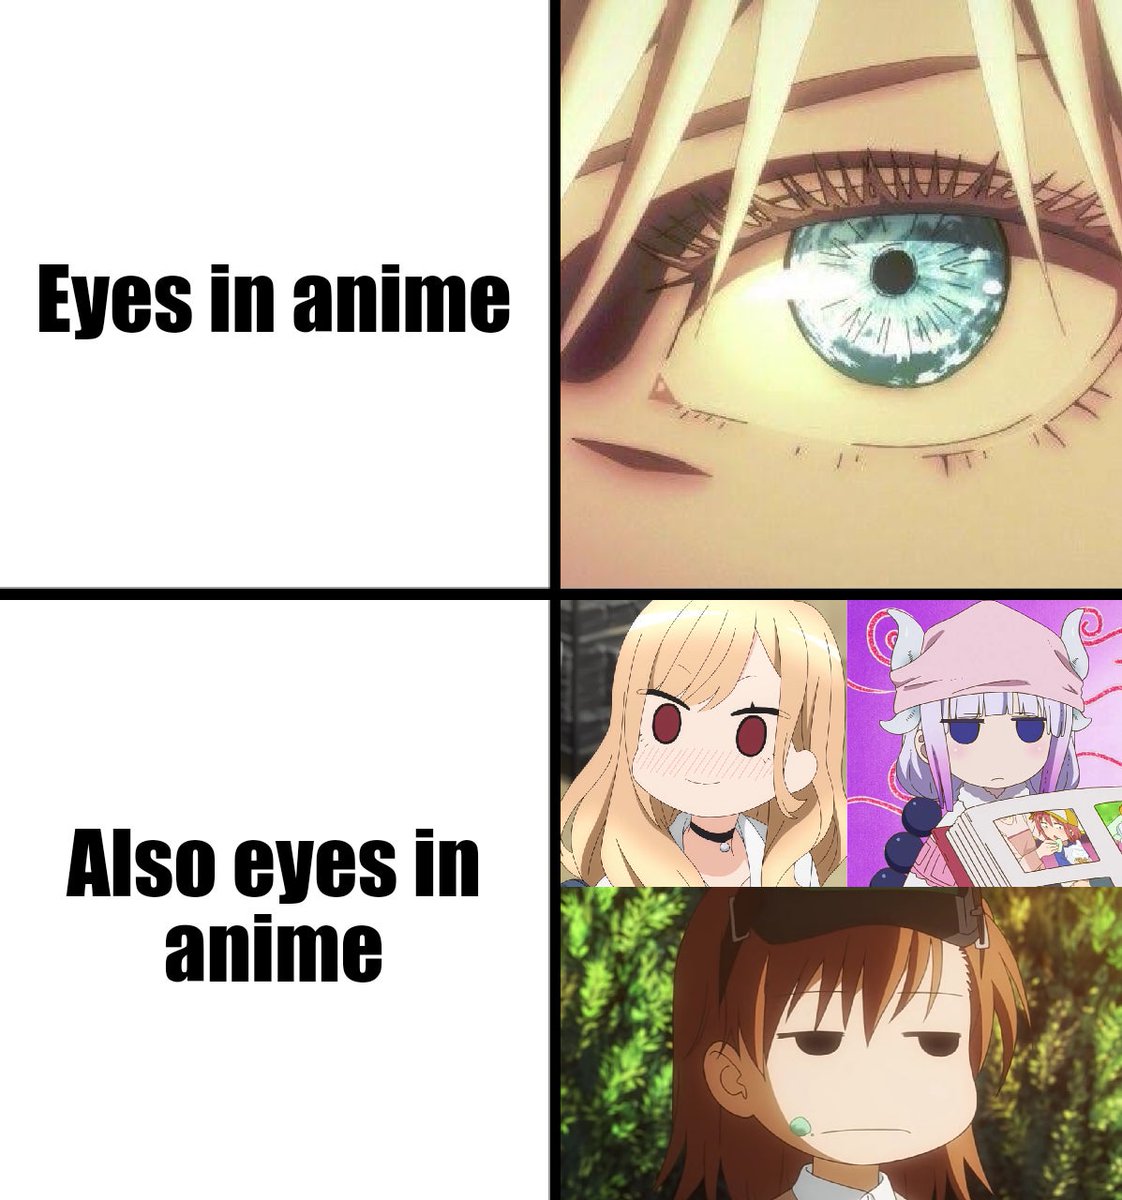 Show good Anime memes? - Forums 